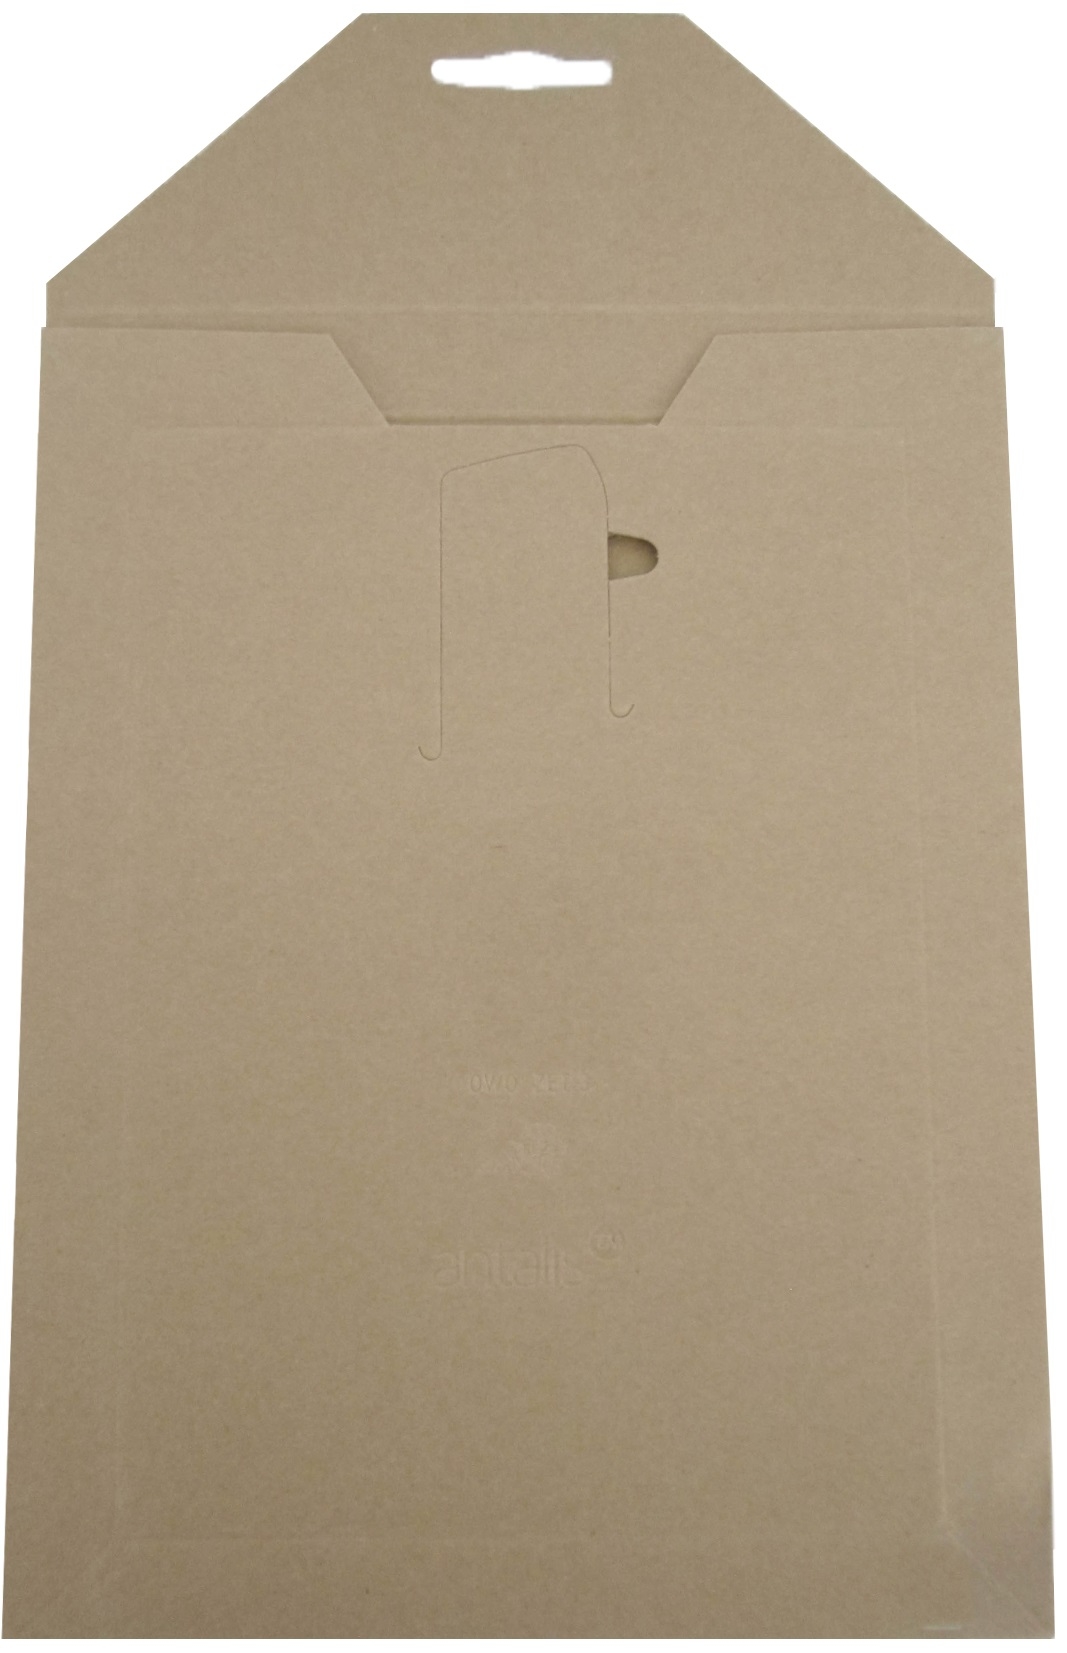 OWO-ZET Enveloppes Carton 1 276223 176x250mm brun 50 pcs.